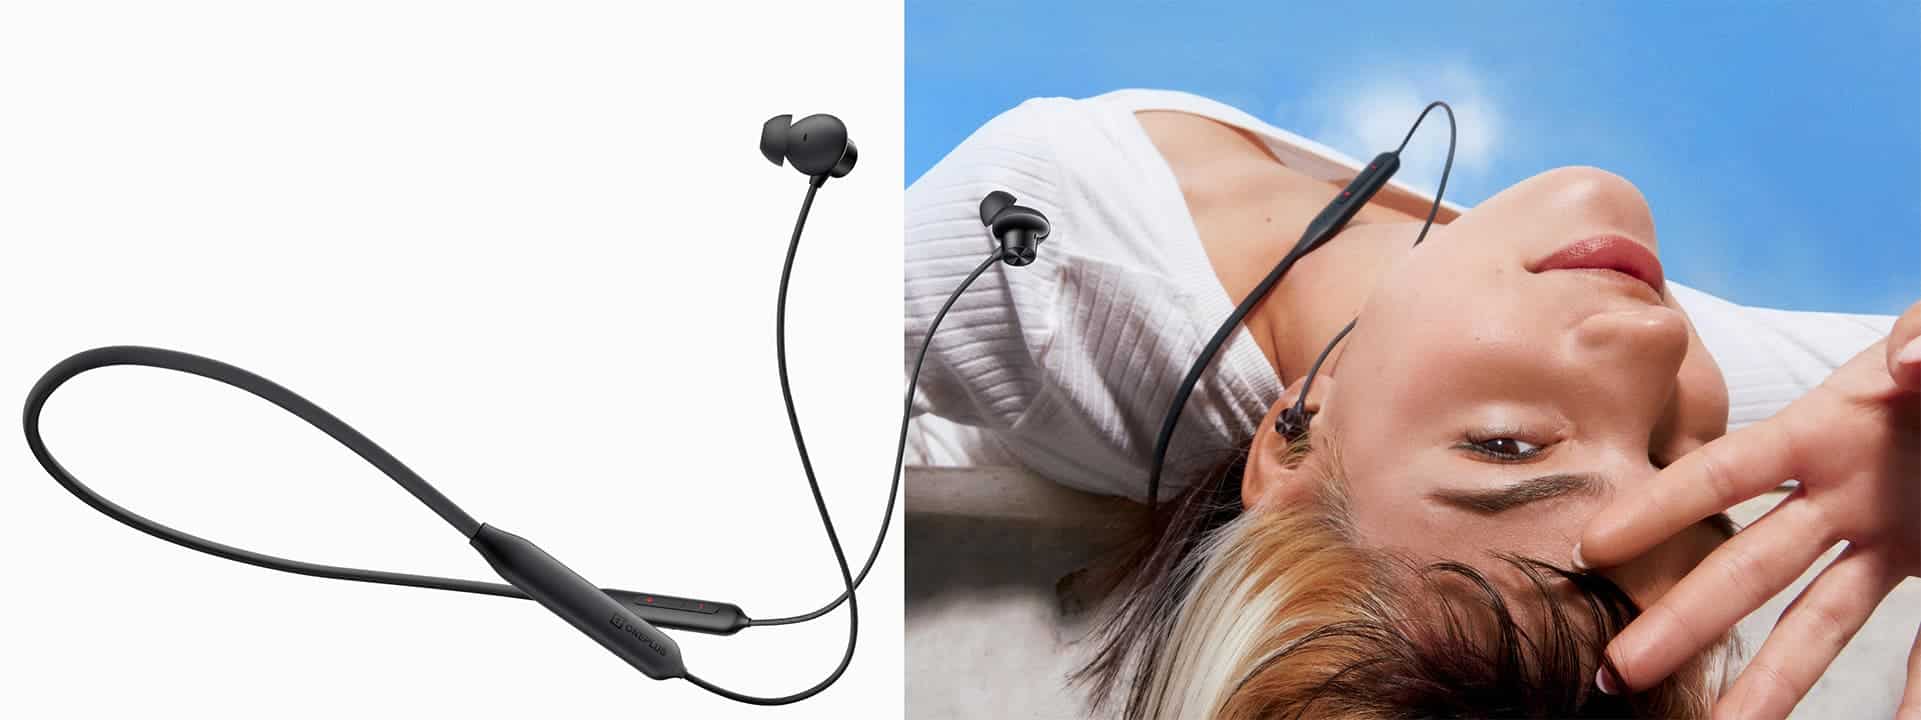 OnePlus Bullets Wireless Z2 – Best Neckband Headphones for Battery Life